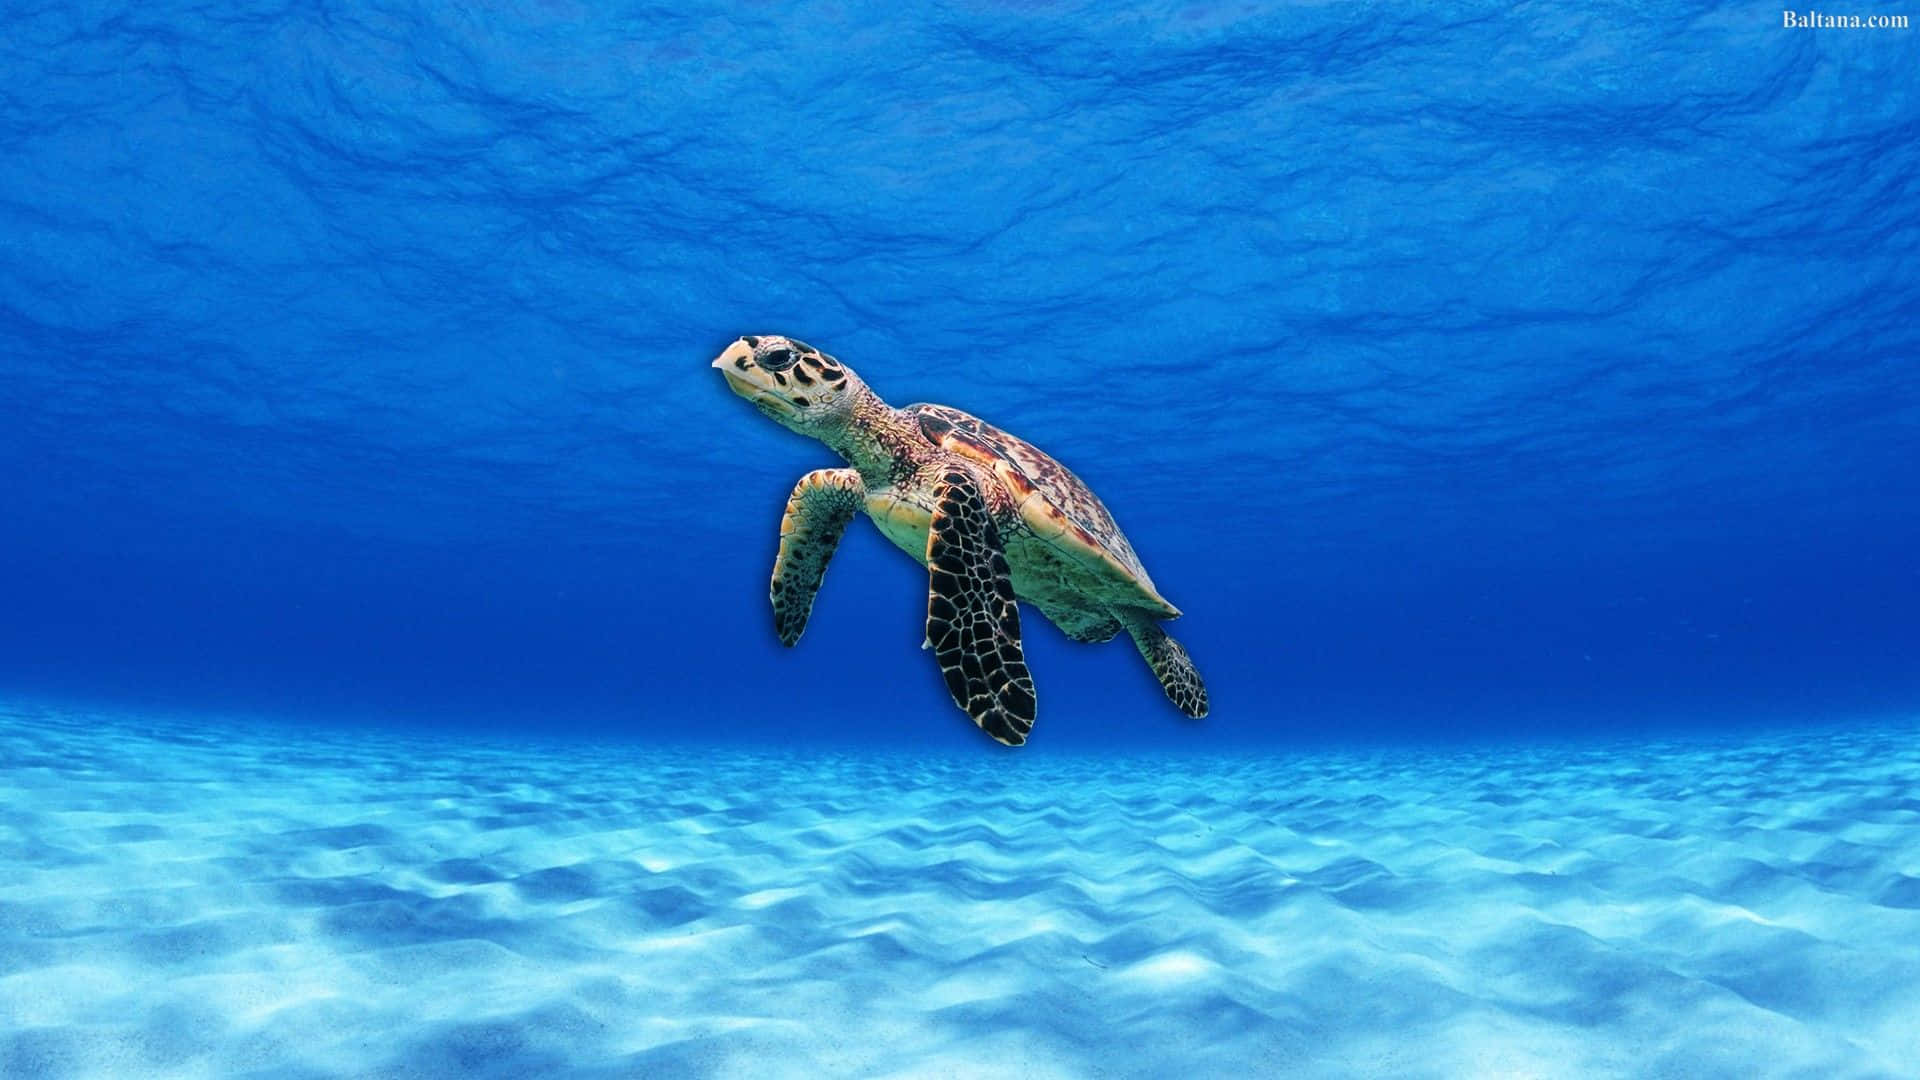 Upplevelskönheten I Naturen Med En Sköldpadda-telefon Bakgrund I Hd Wallpaper